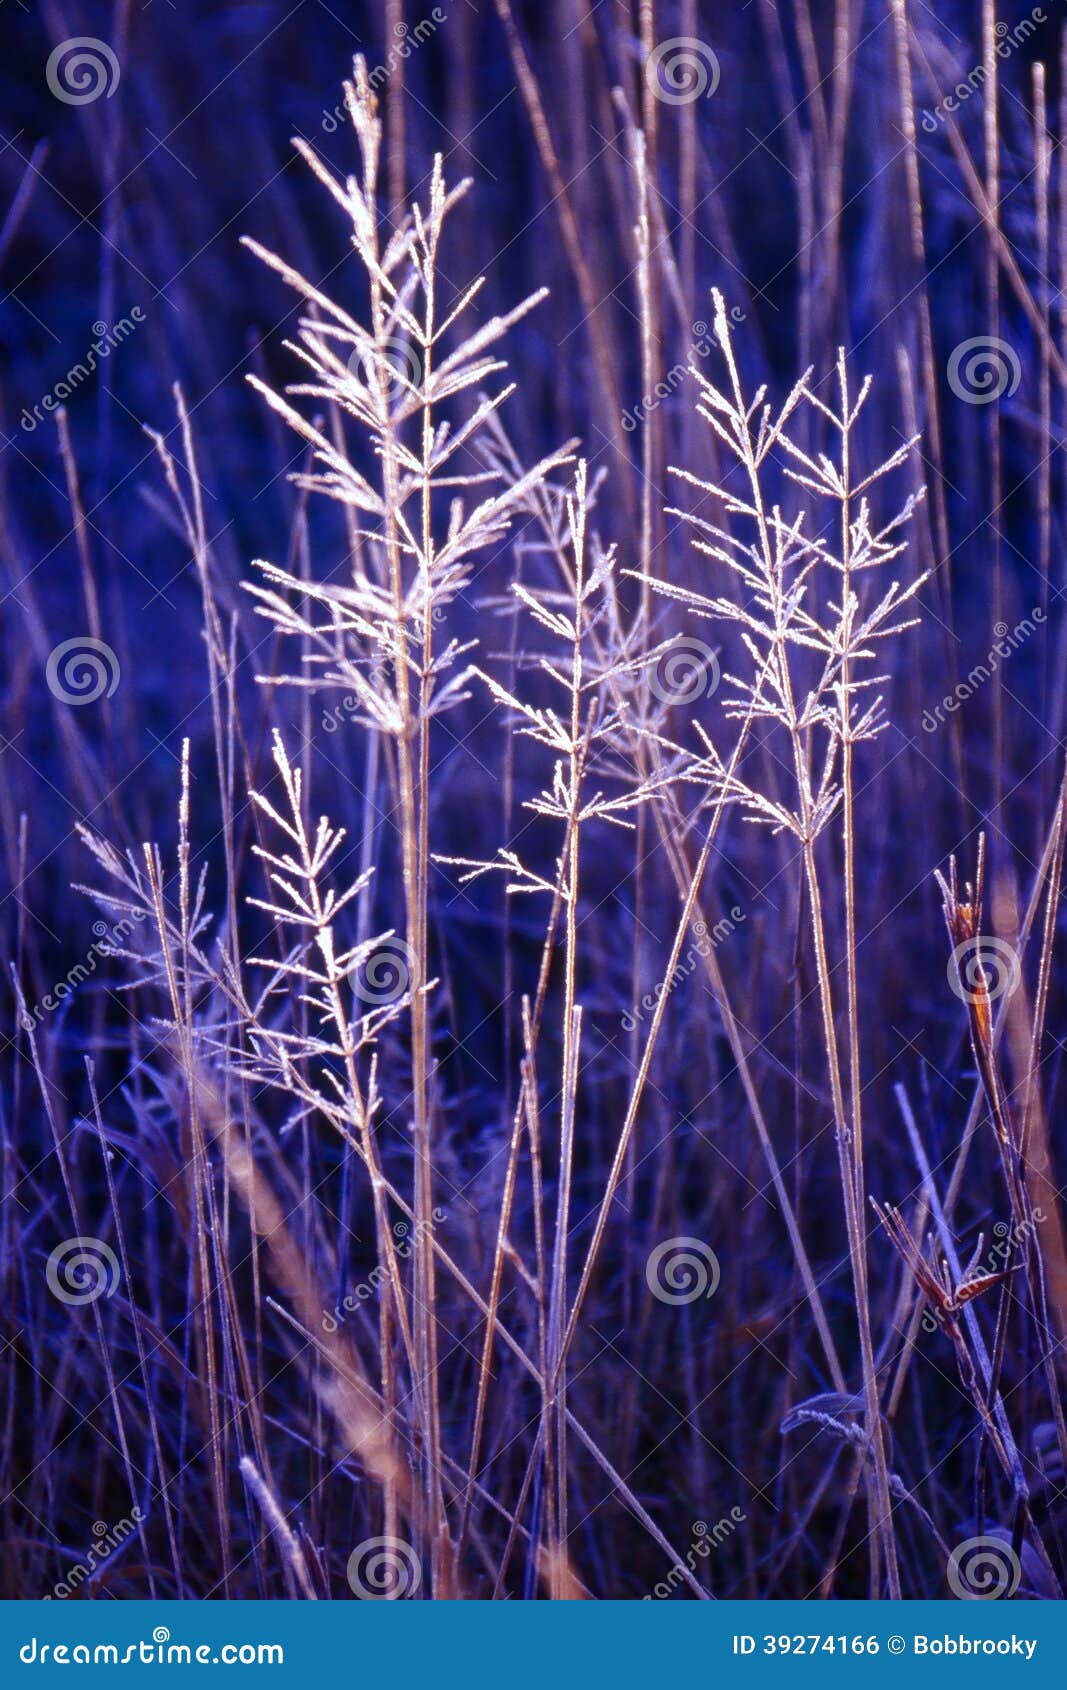 hoar frosted grasses, wintertime